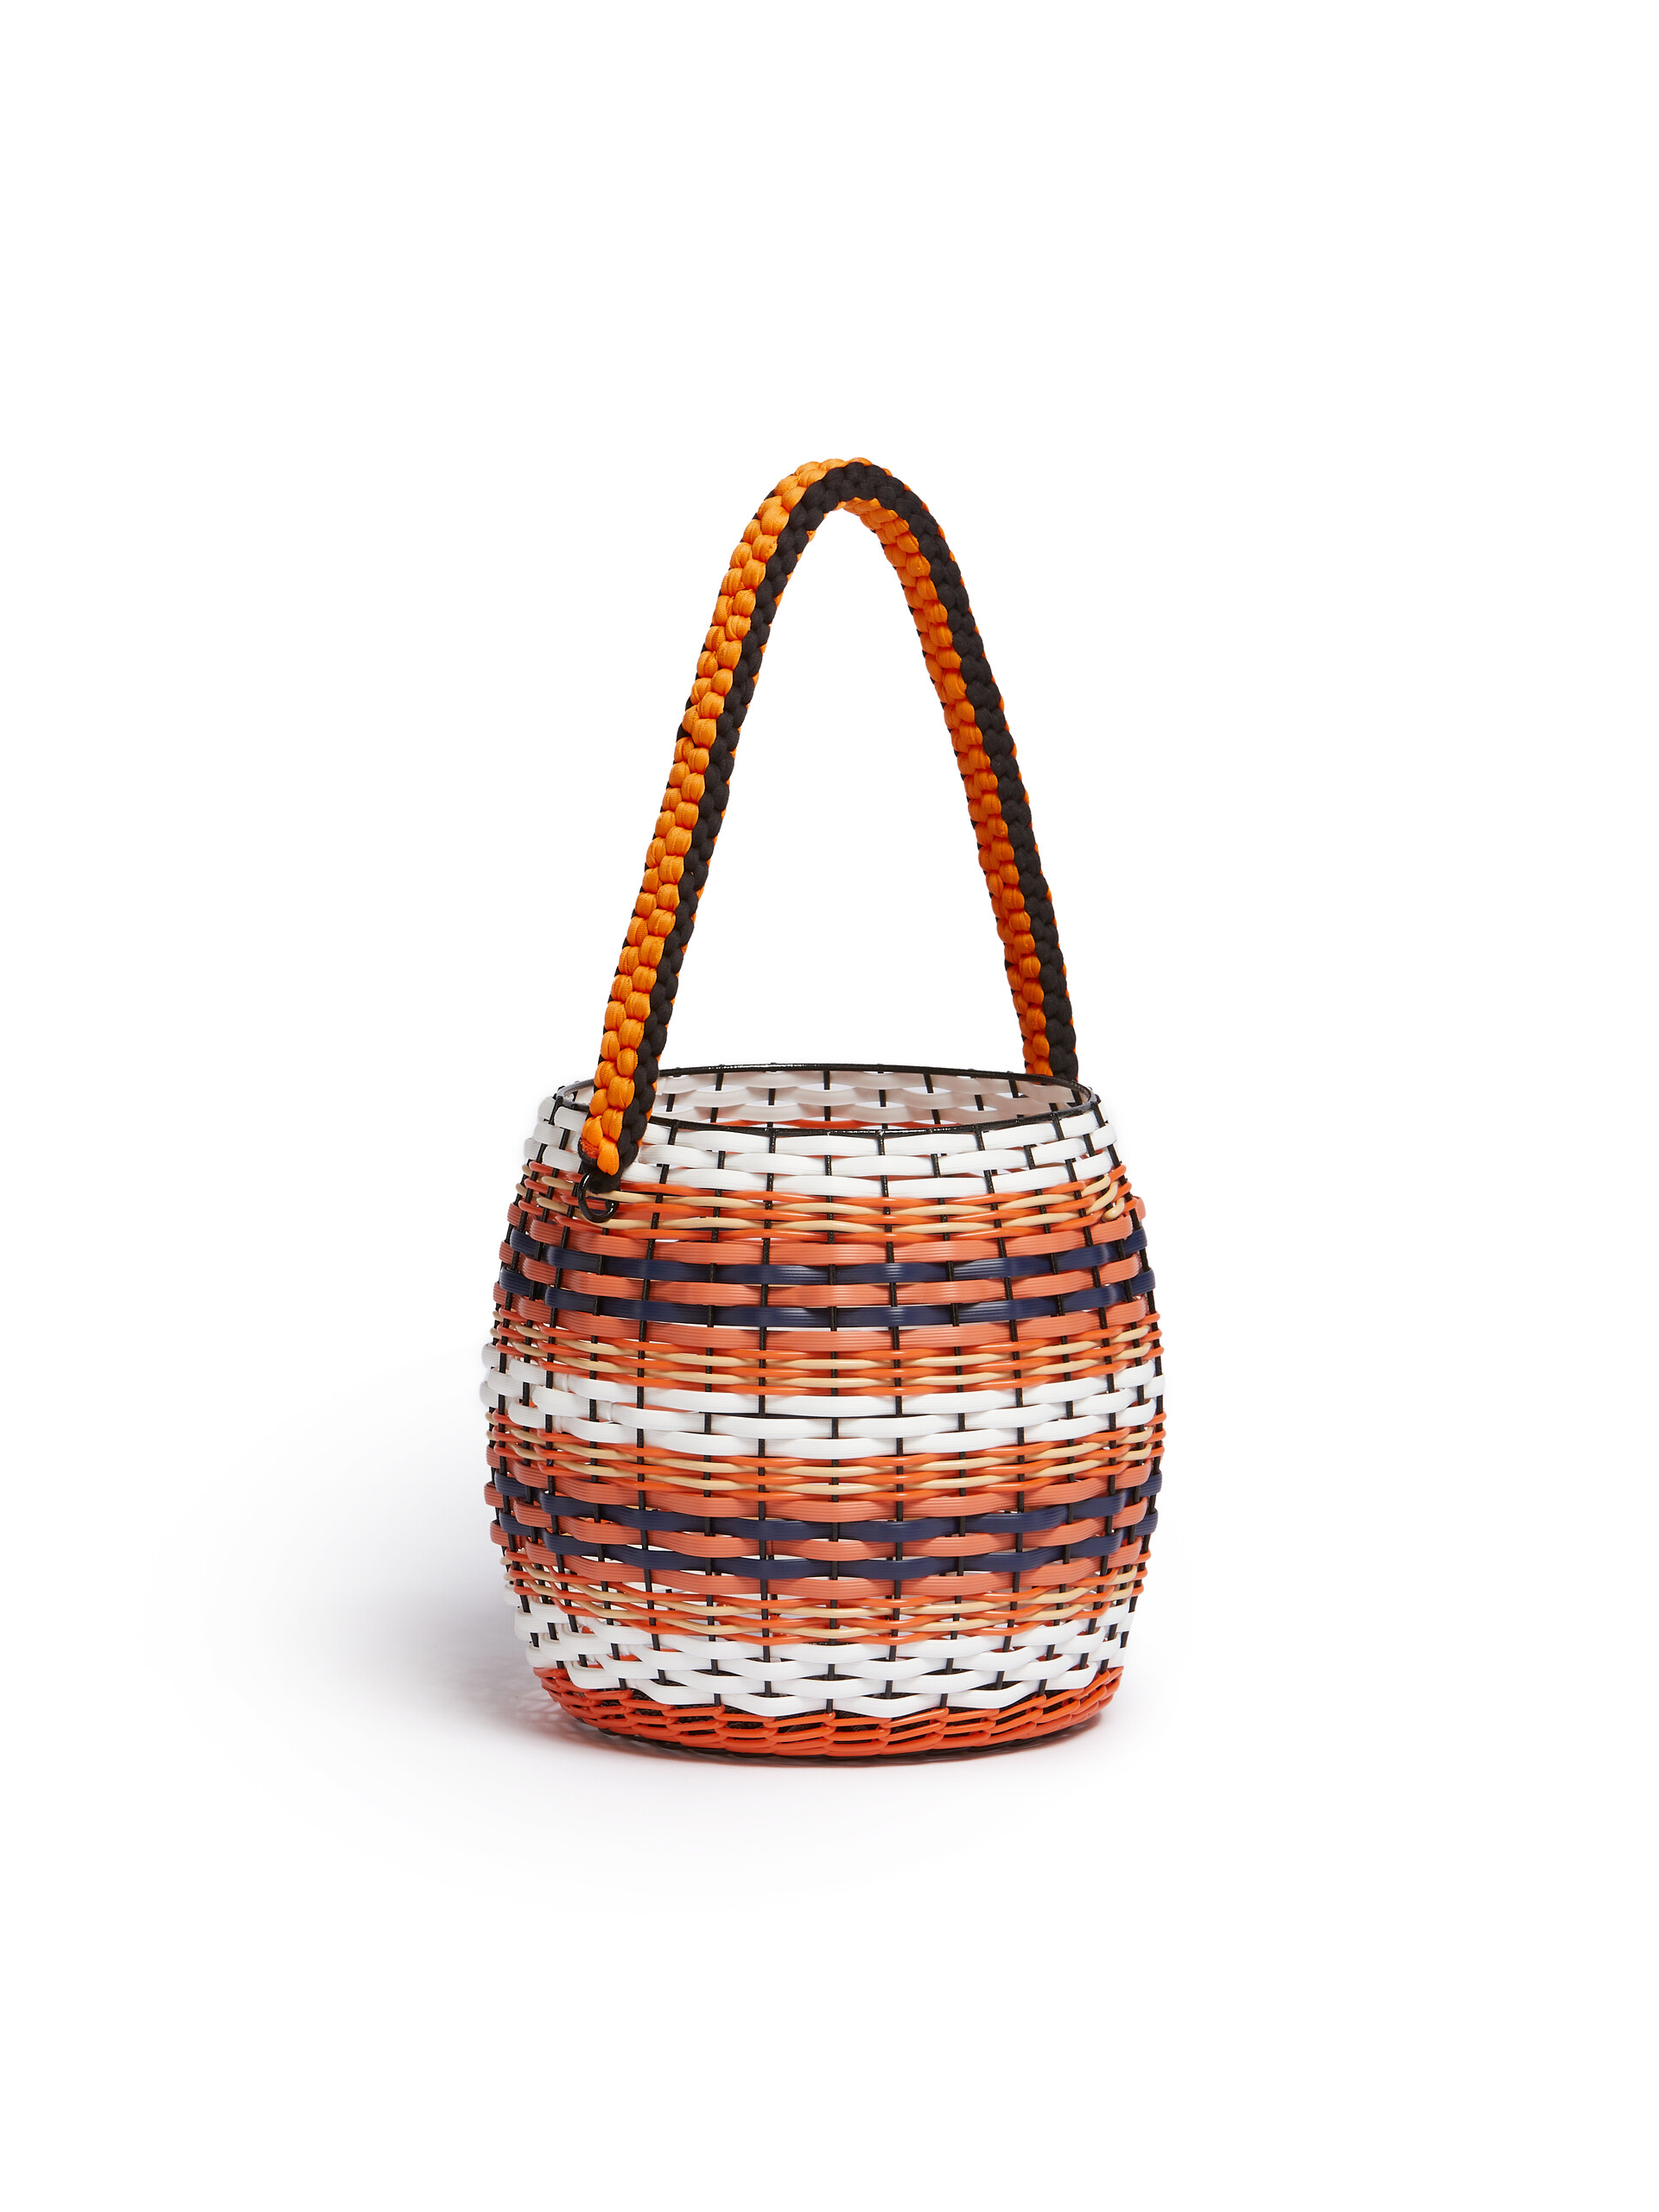 Orange and white MARNI MARKET woven cable basket - Accessories - Image 2